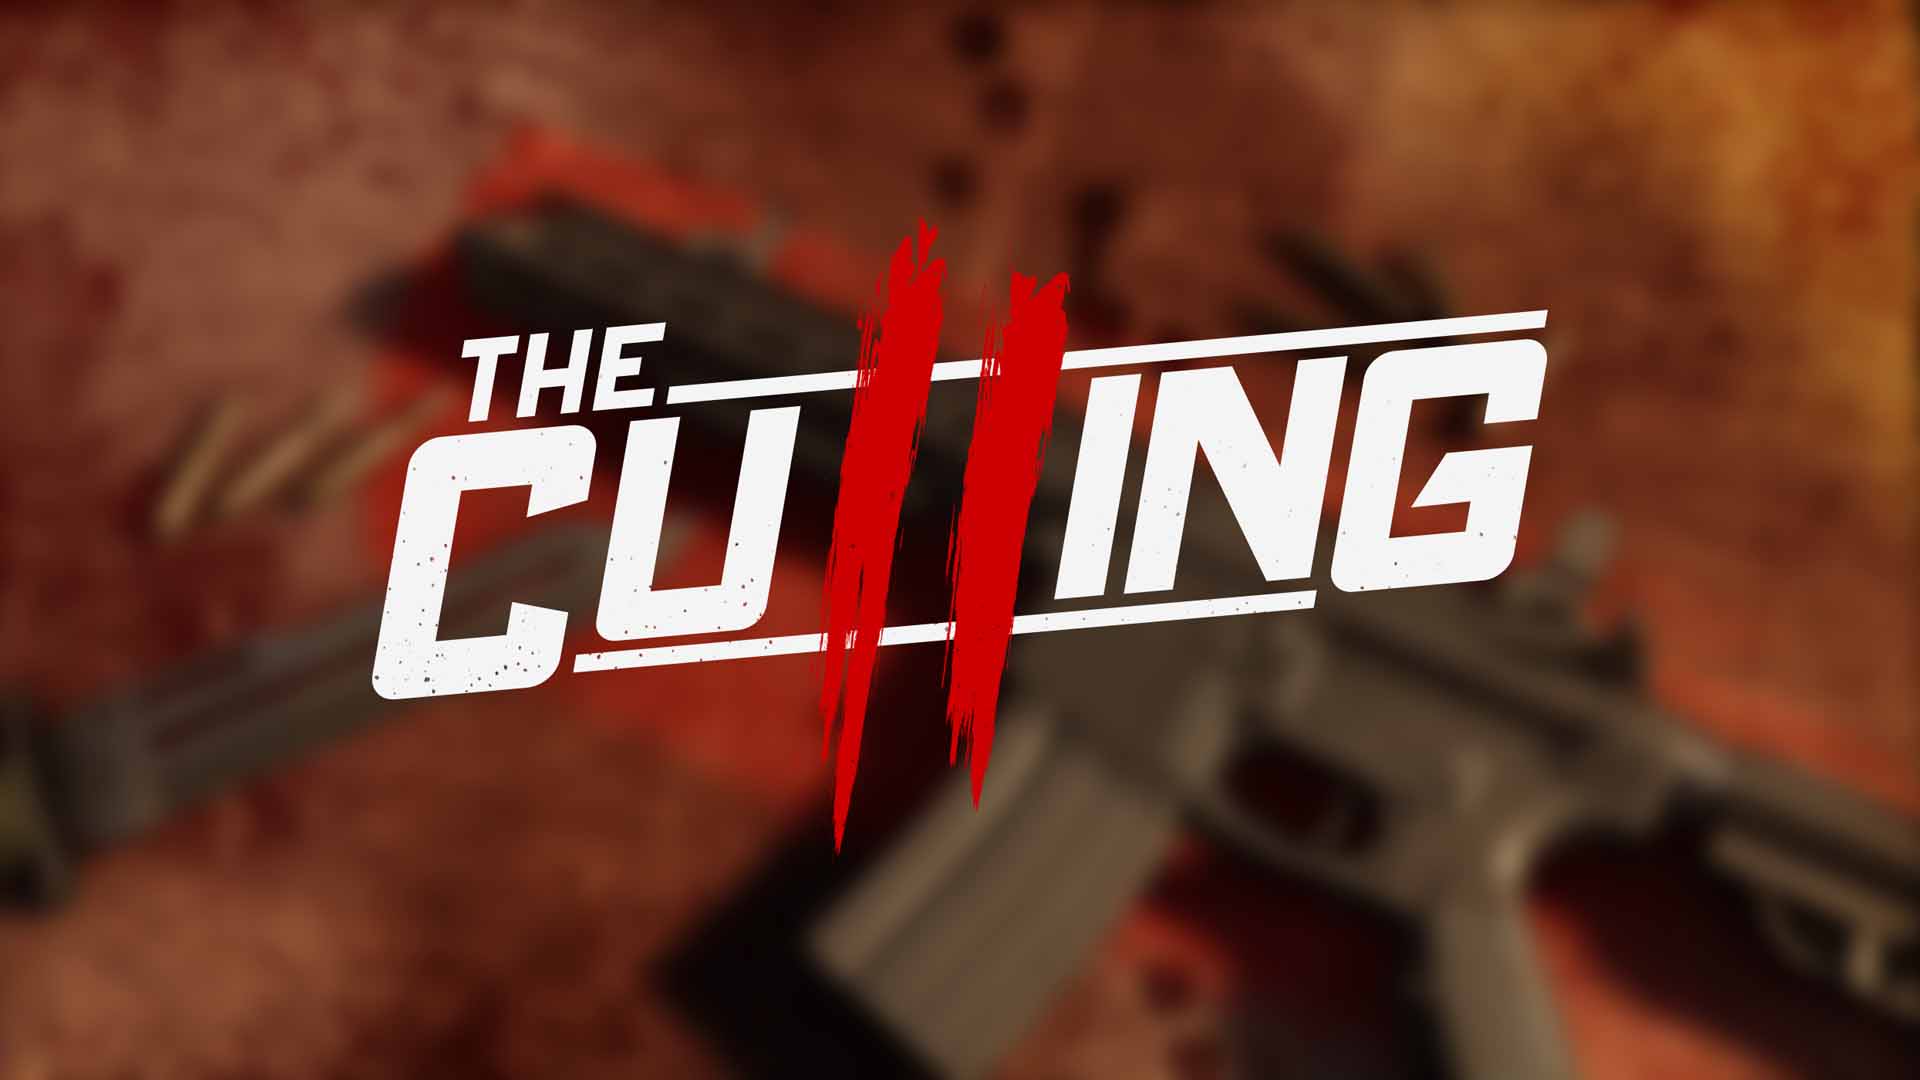 The-Culling-2-close-no-sale1.jpg